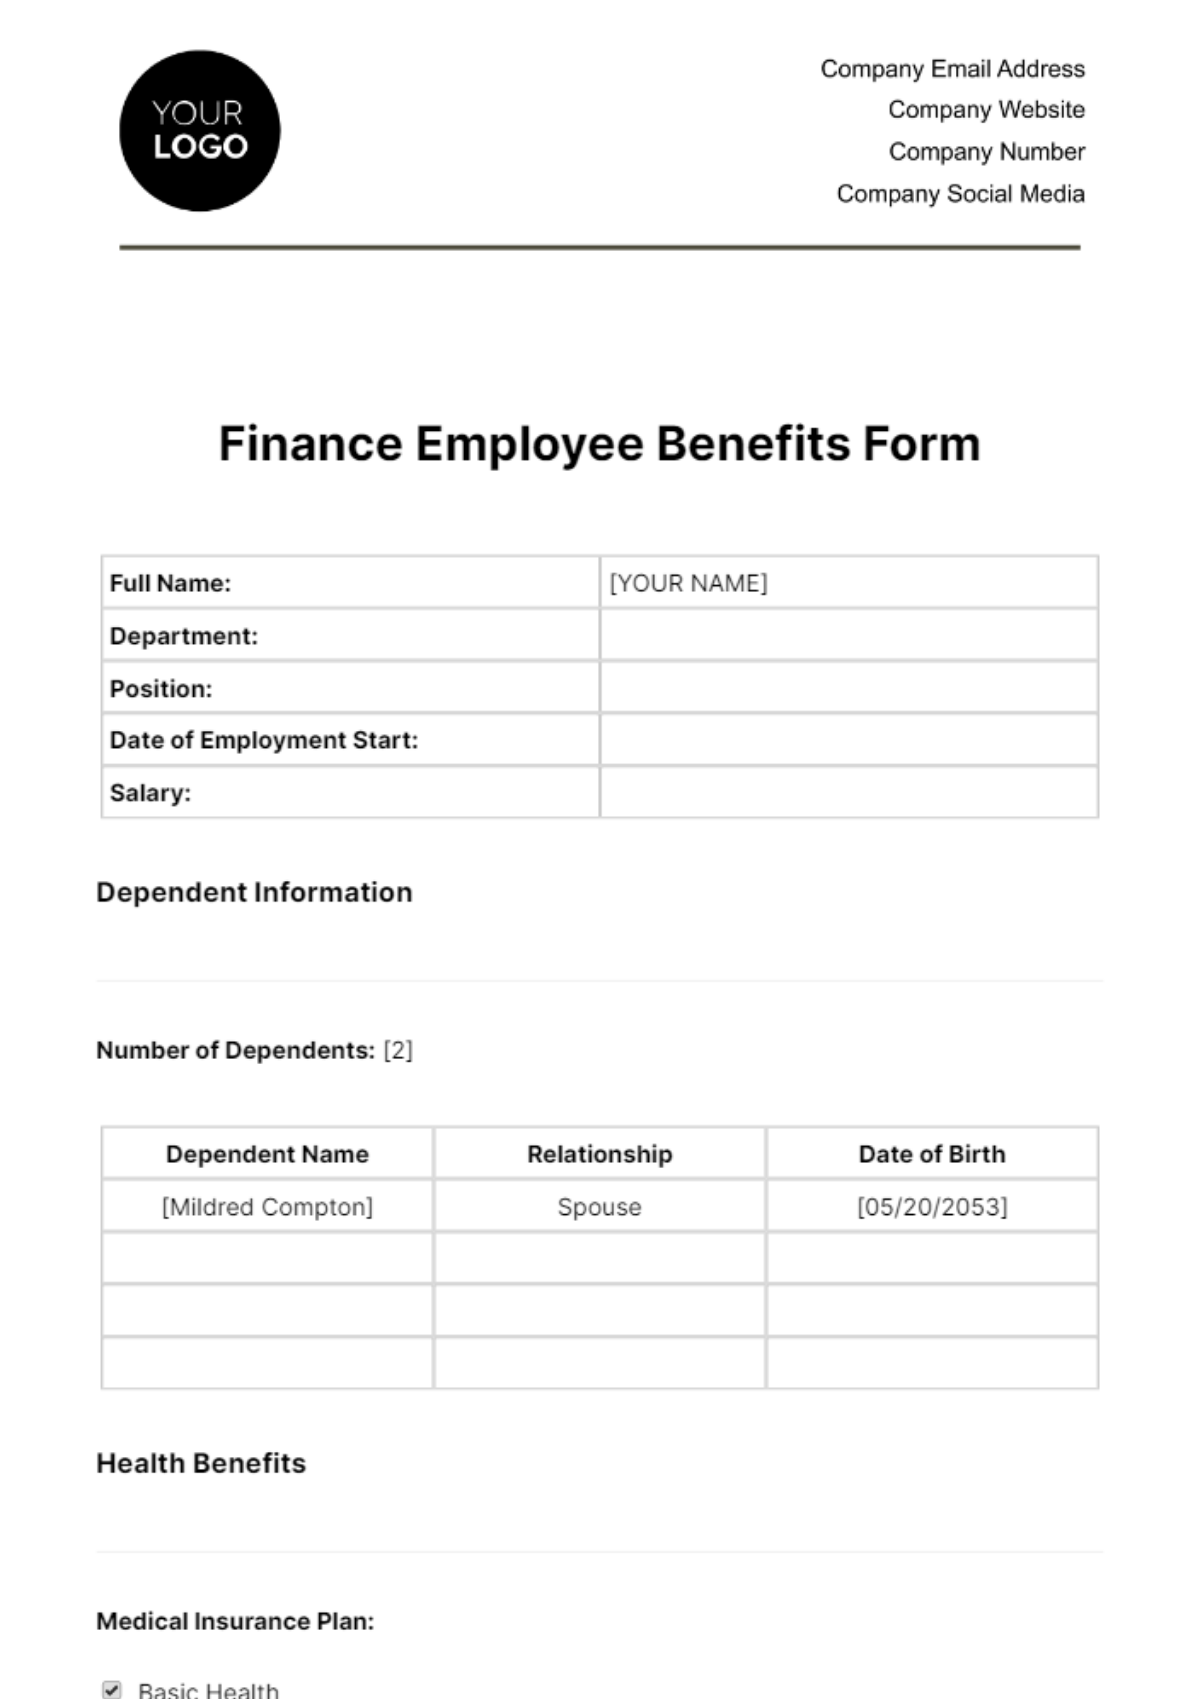 Free Finance Employee Benefits Form Template